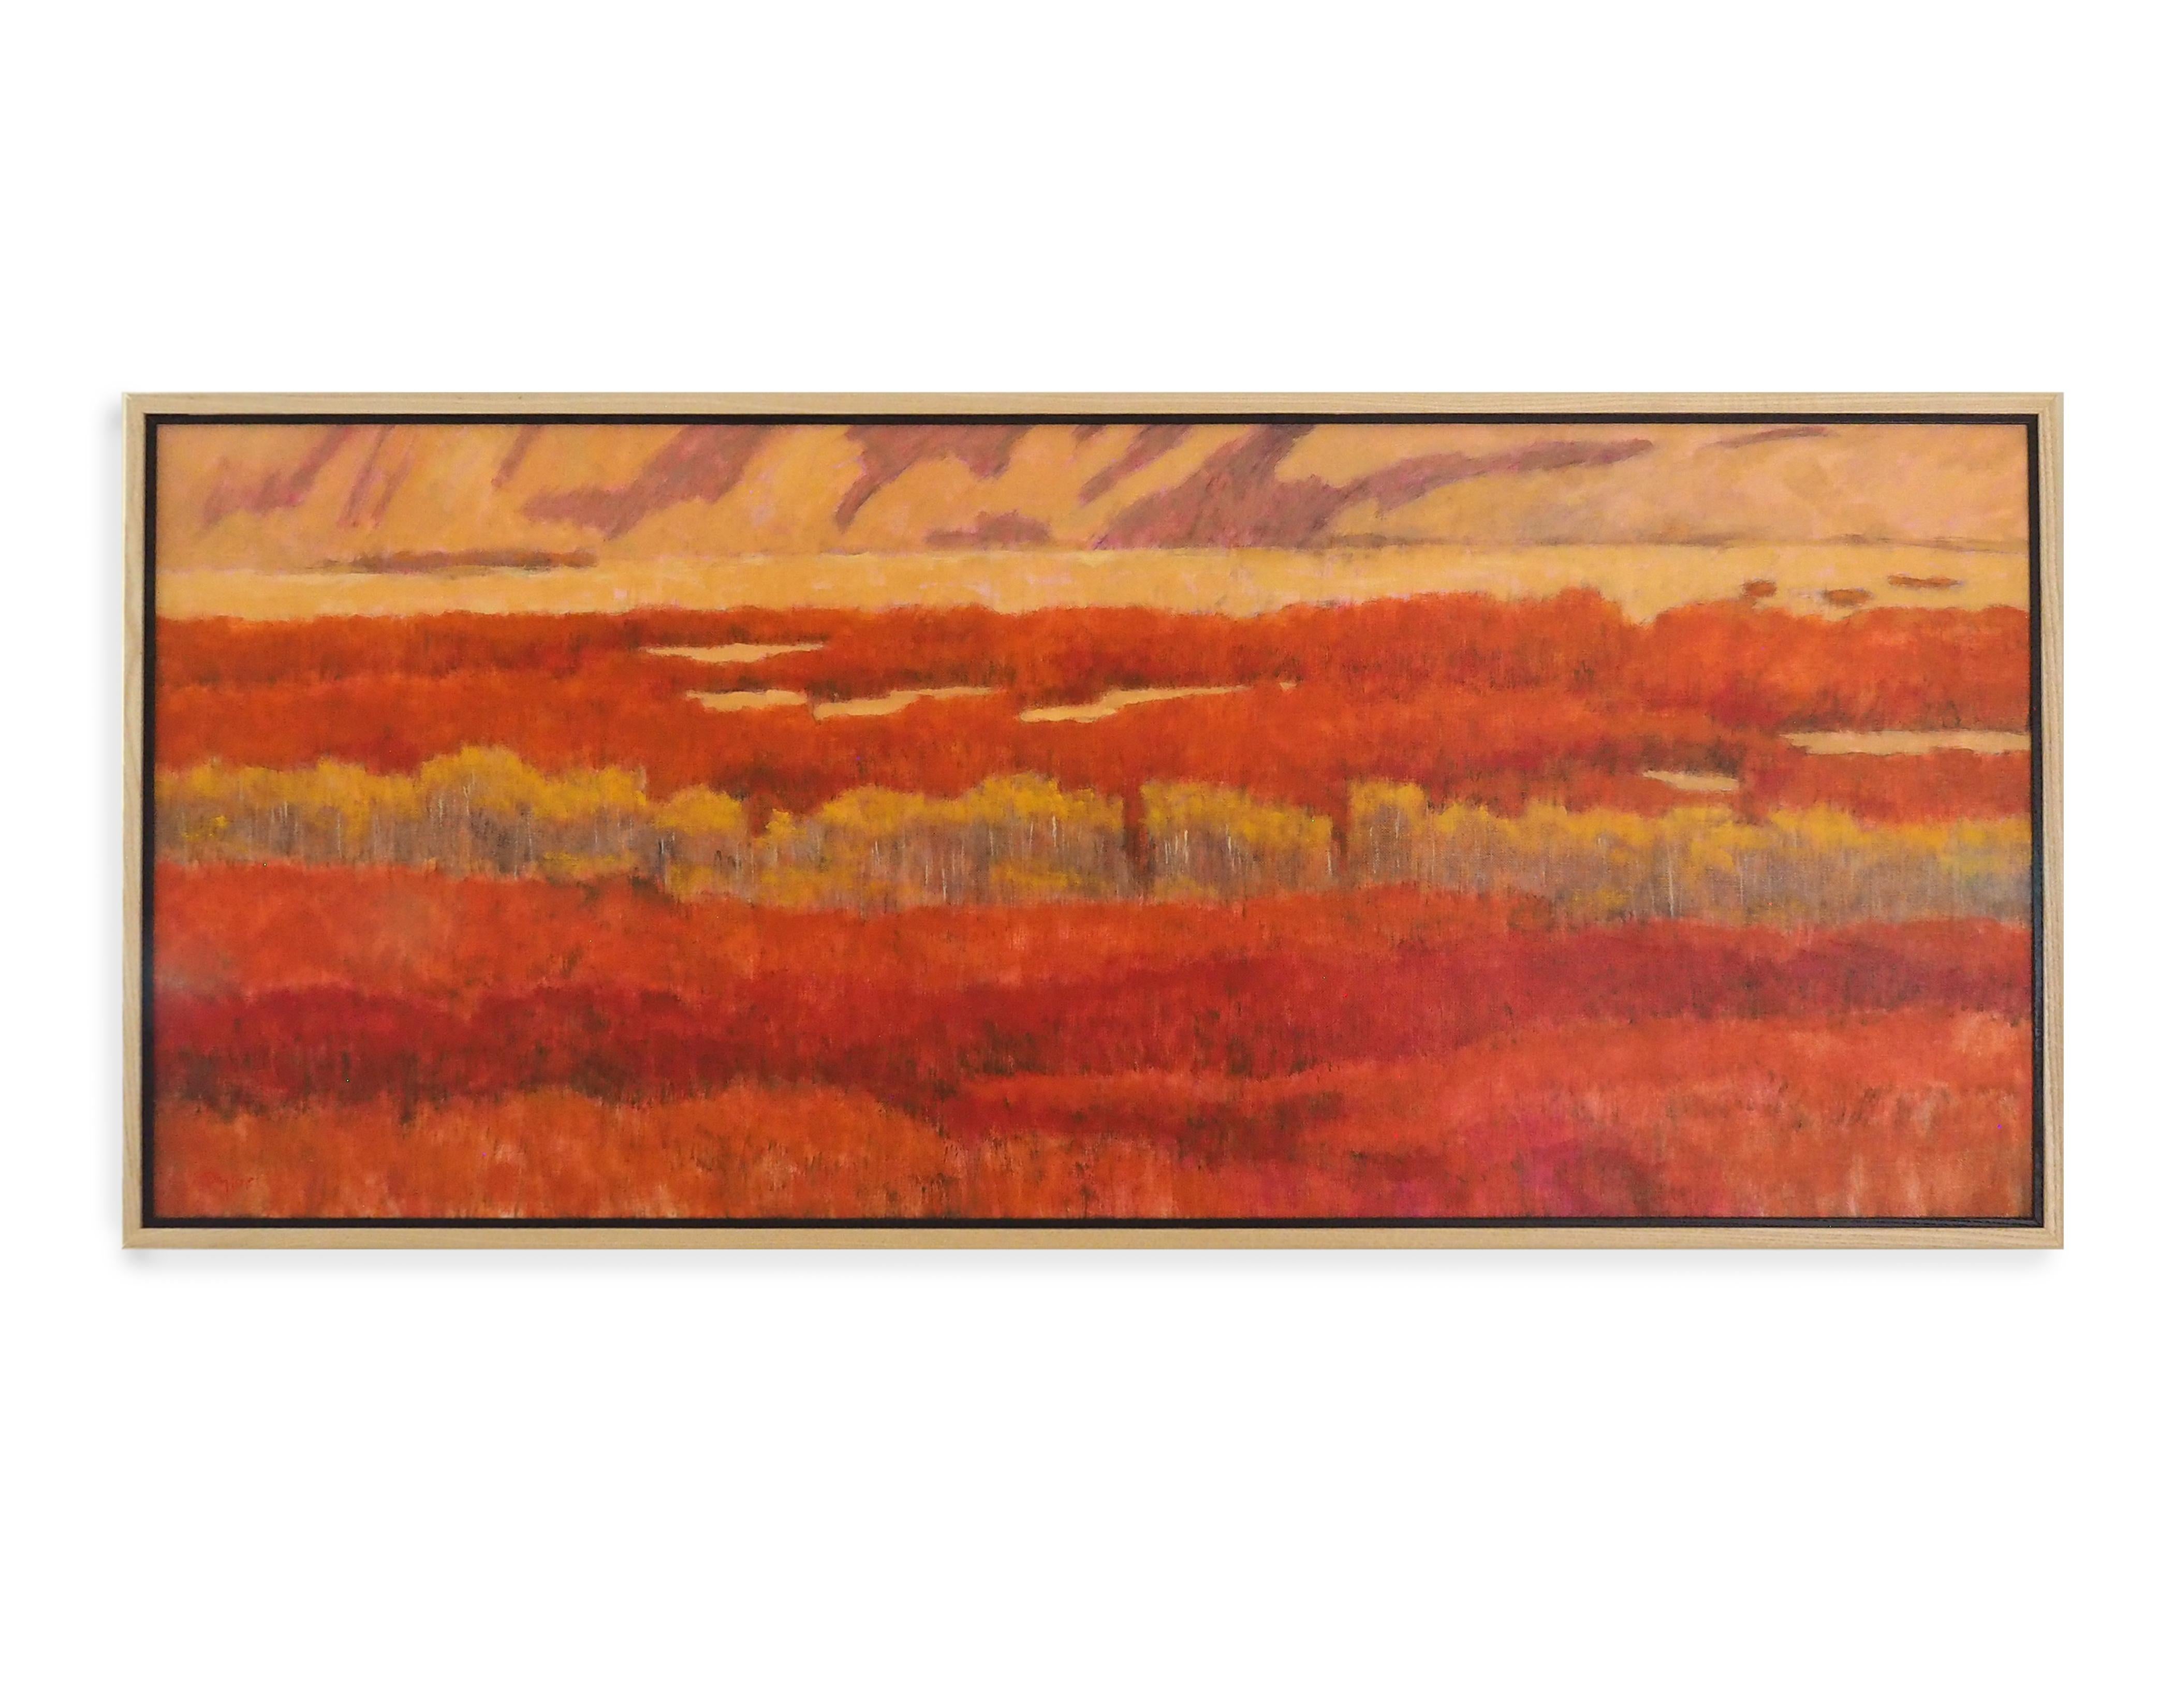 Andy Taylor Landscape Painting - Oak Ocean (Fall landscape, orange/red colors, Aspen trees, cliffs)